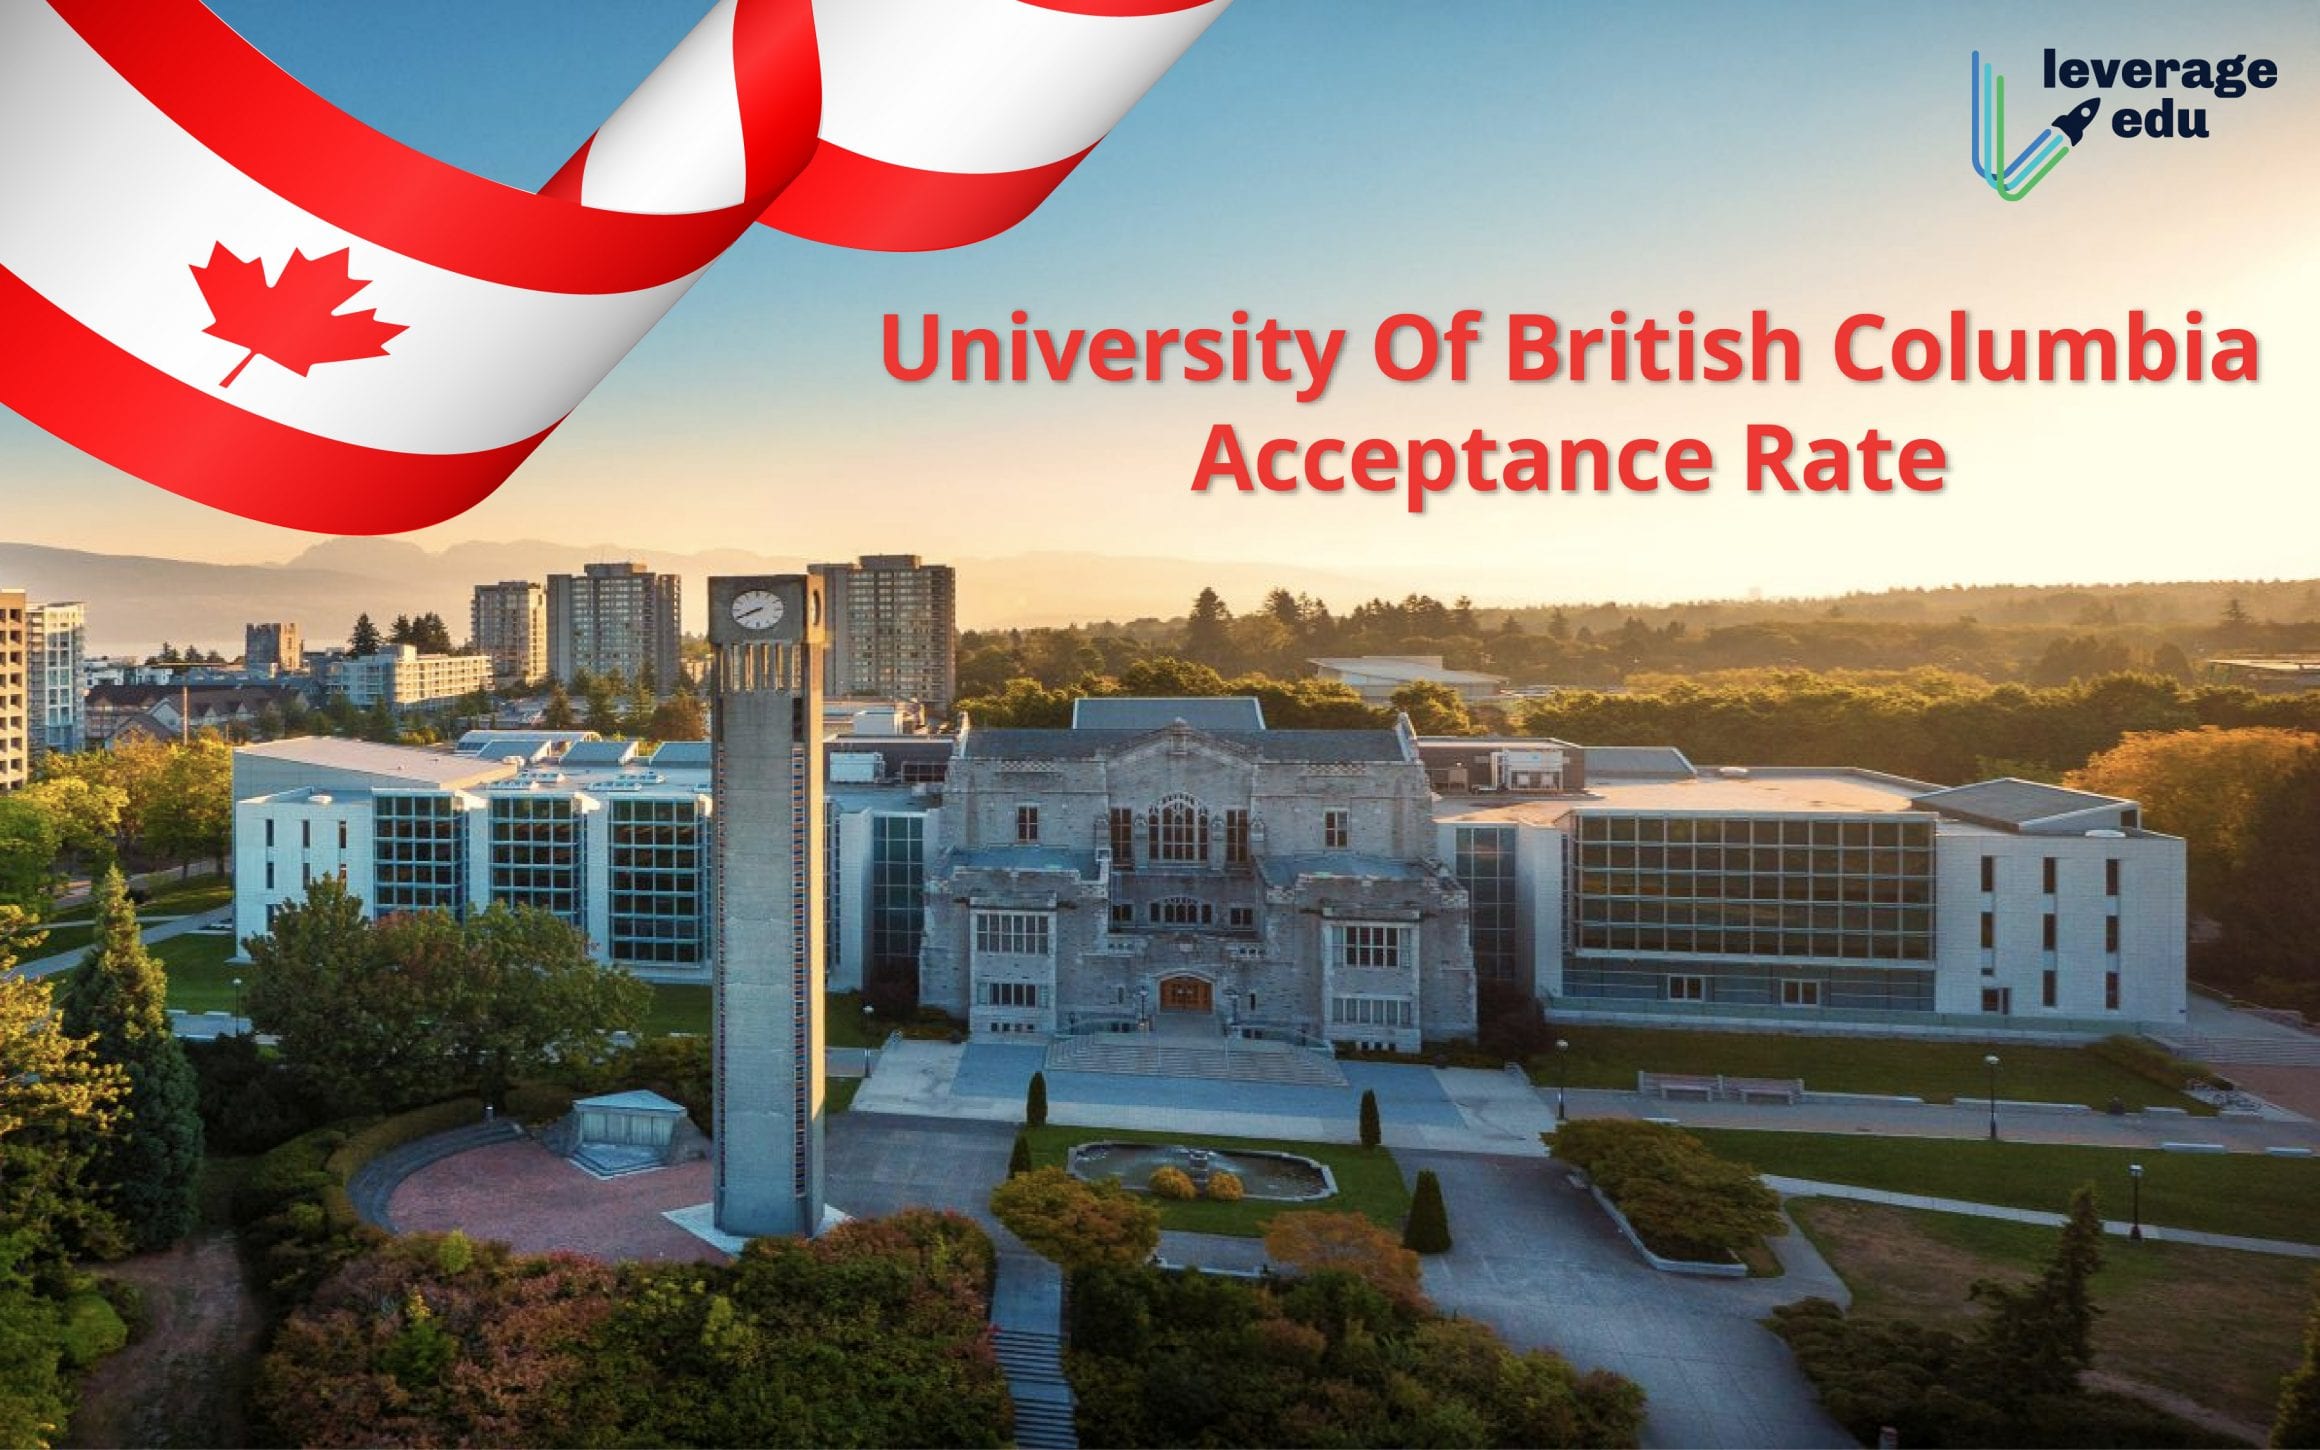 University of British Columbia Acceptance Rate 2021 Leverage Edu